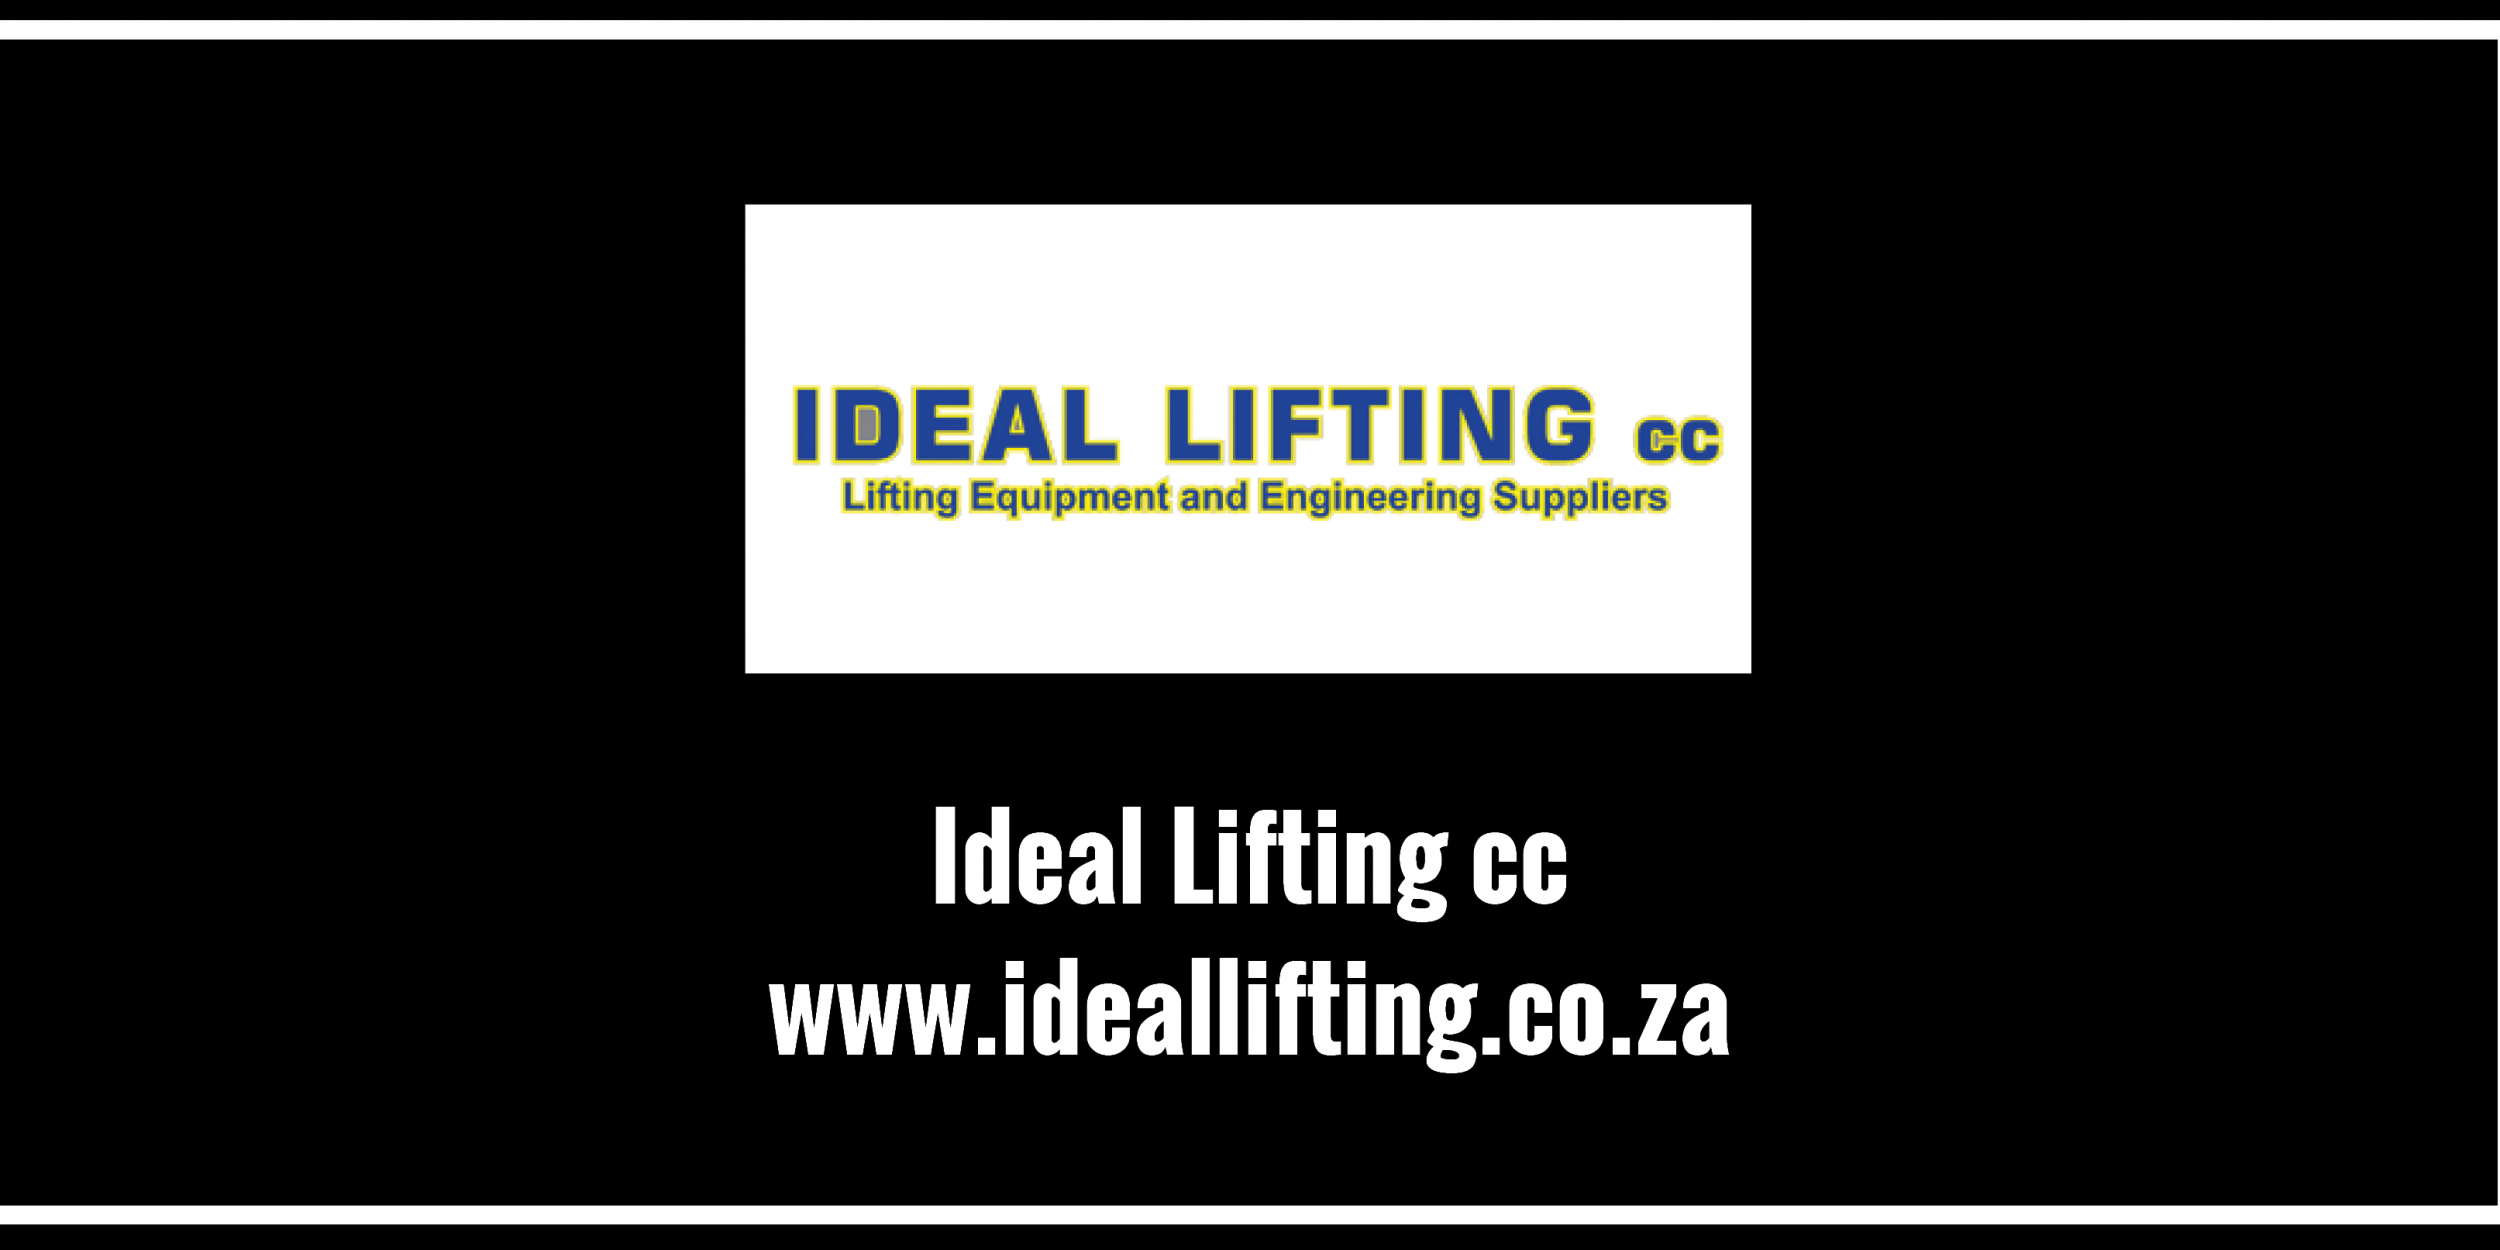 Ideal Lifting cc